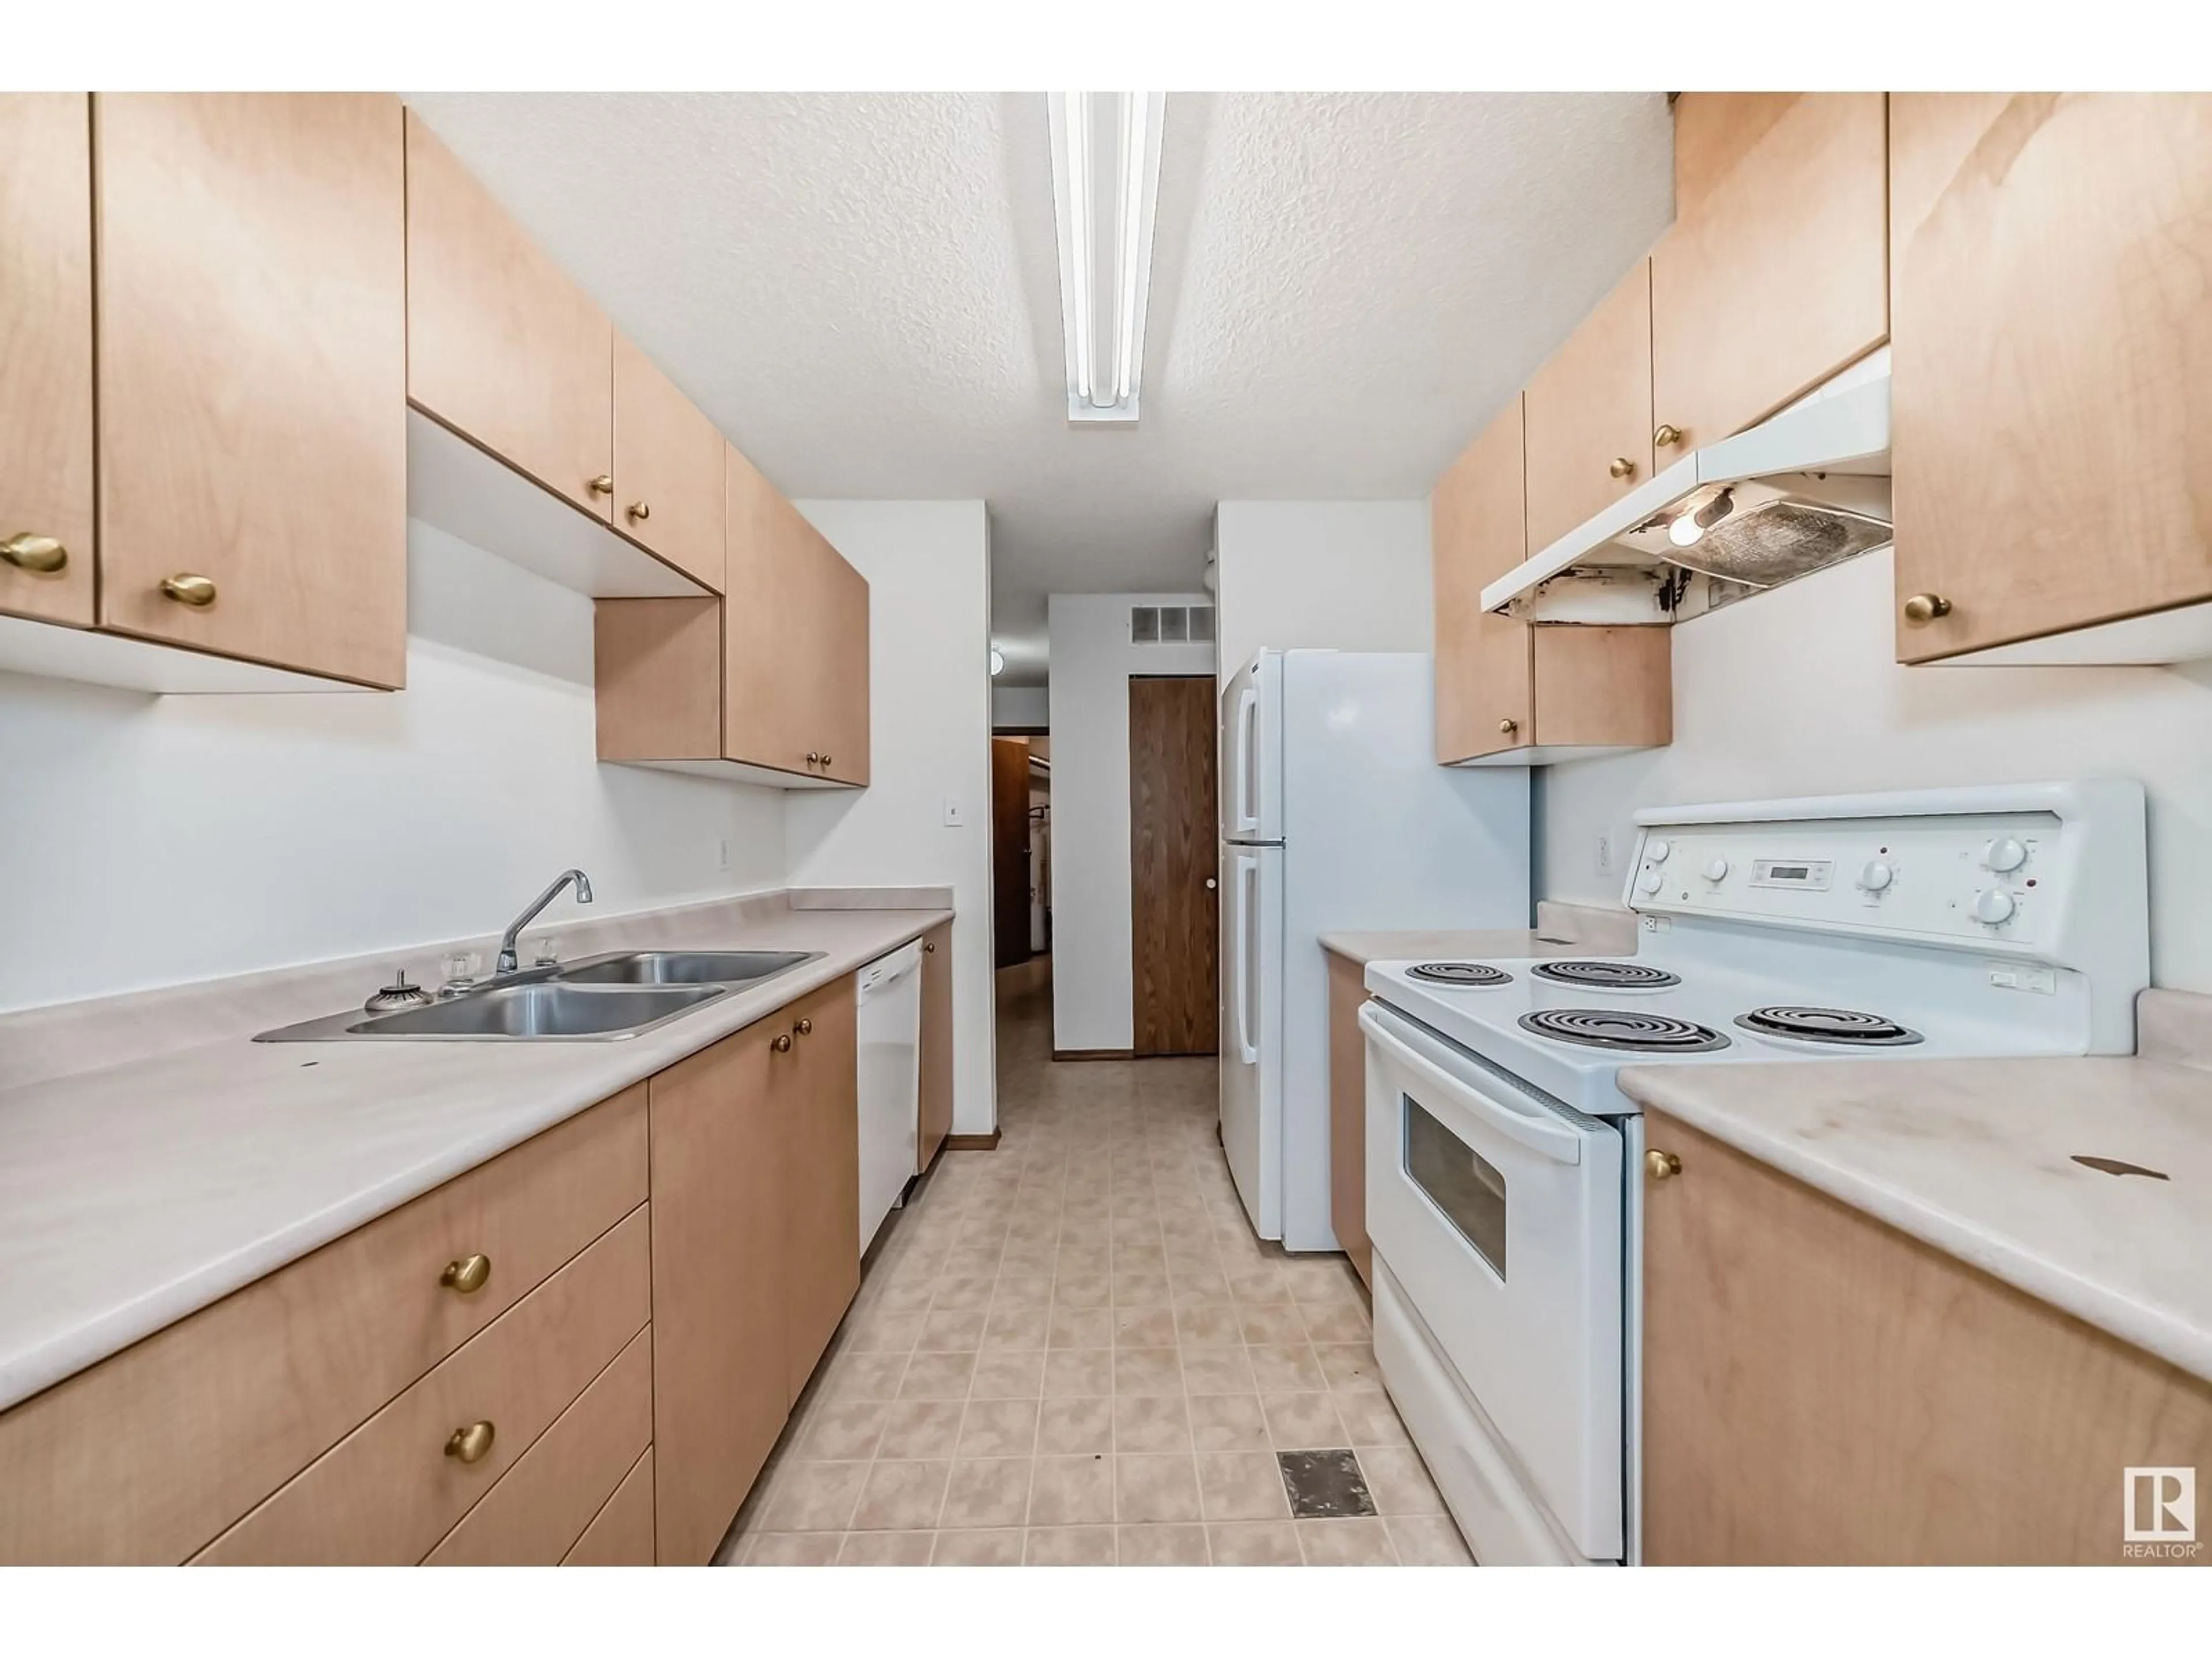 Standard kitchen for #107 620 KING ST, Spruce Grove Alberta T7X4K1